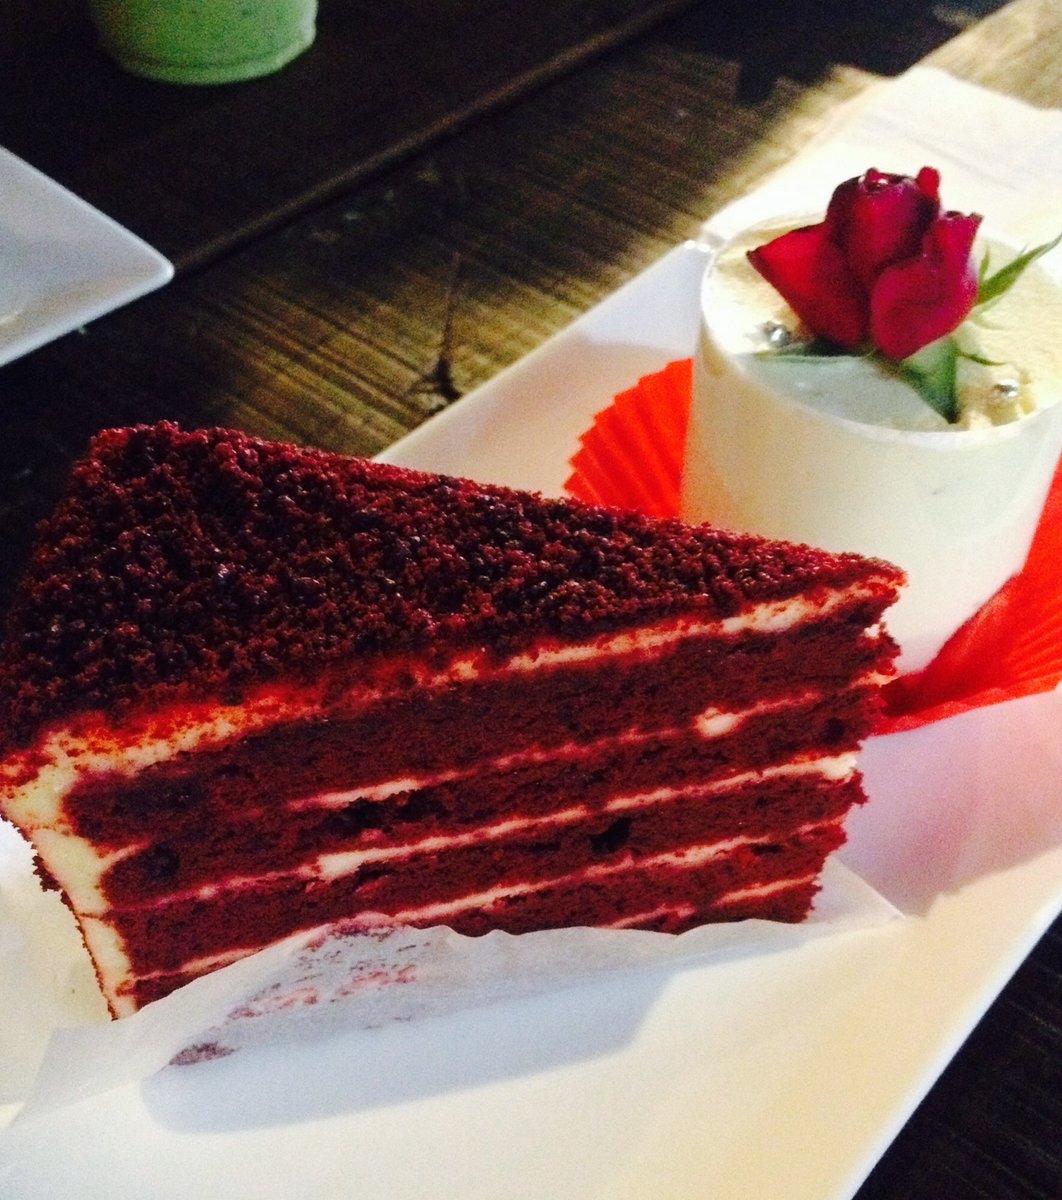 Msm シドニー 大人気韓国カフェ 薔薇 レッドベルベットケーキがお勧め 深夜営業 Playlife プレイライフ